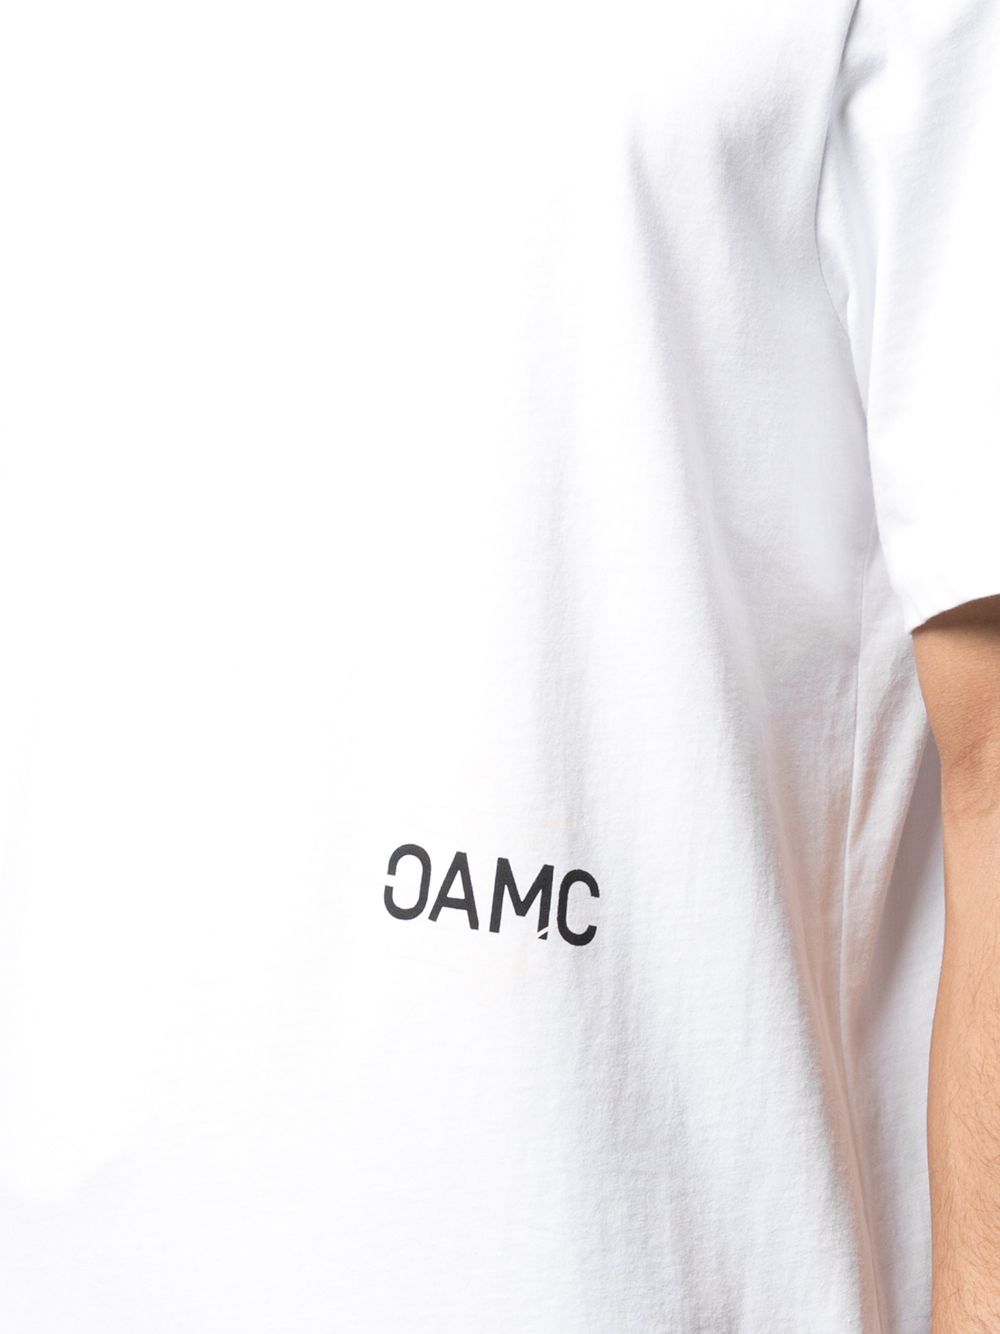 фото Oamc футболка с короткими рукавами